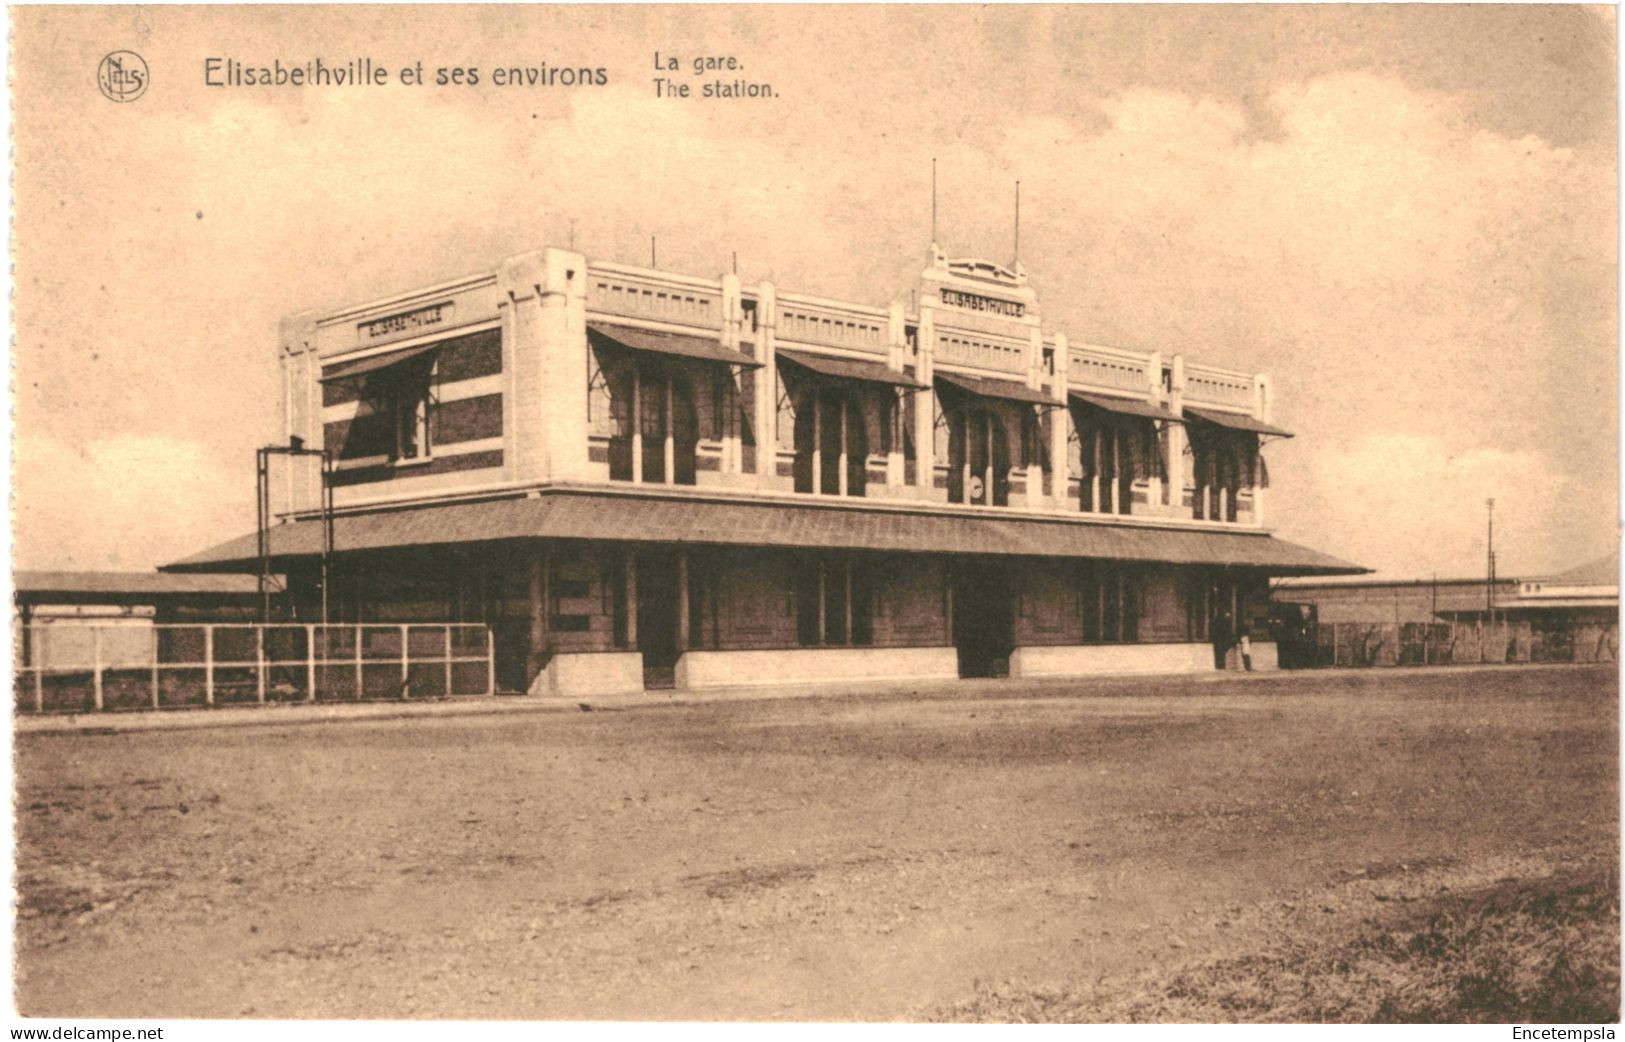 CPA Carte Postale  Congo Kinshasa -Elisabethville Et Ses Environs La Gare     VM78187ok - Lubumbashi